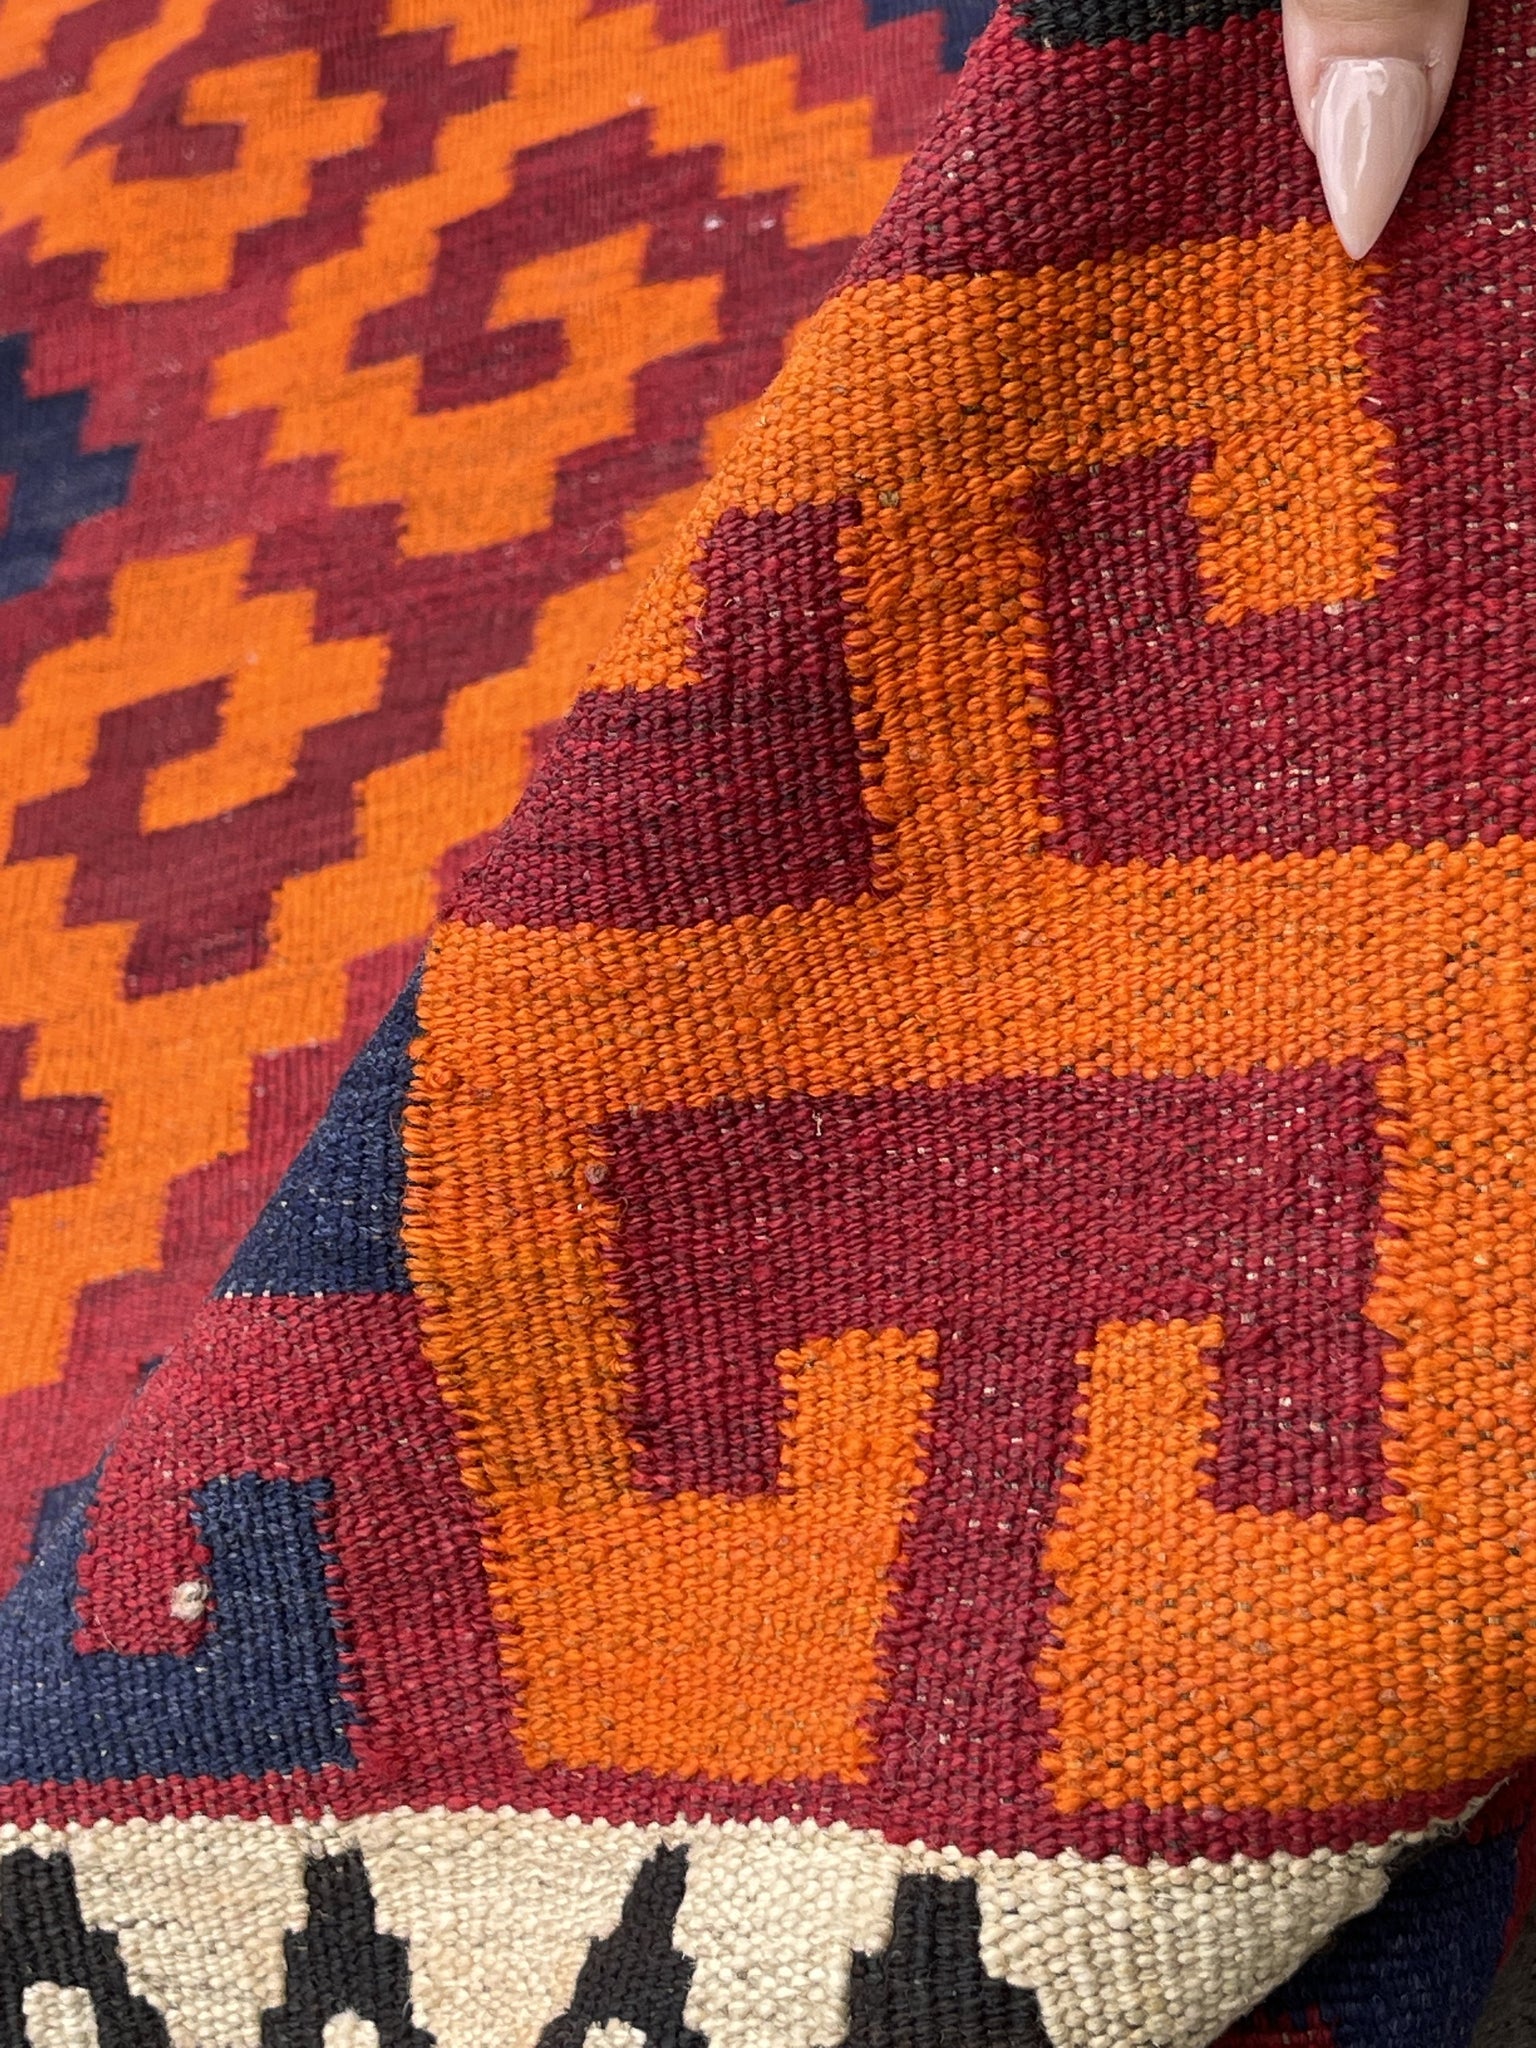 7x11 (210x322) Vintage Kilim Flatweave Afghan Rug | Red White Blue Black Orange| Bohemian Outdoor Tribal Turkish Moroccan